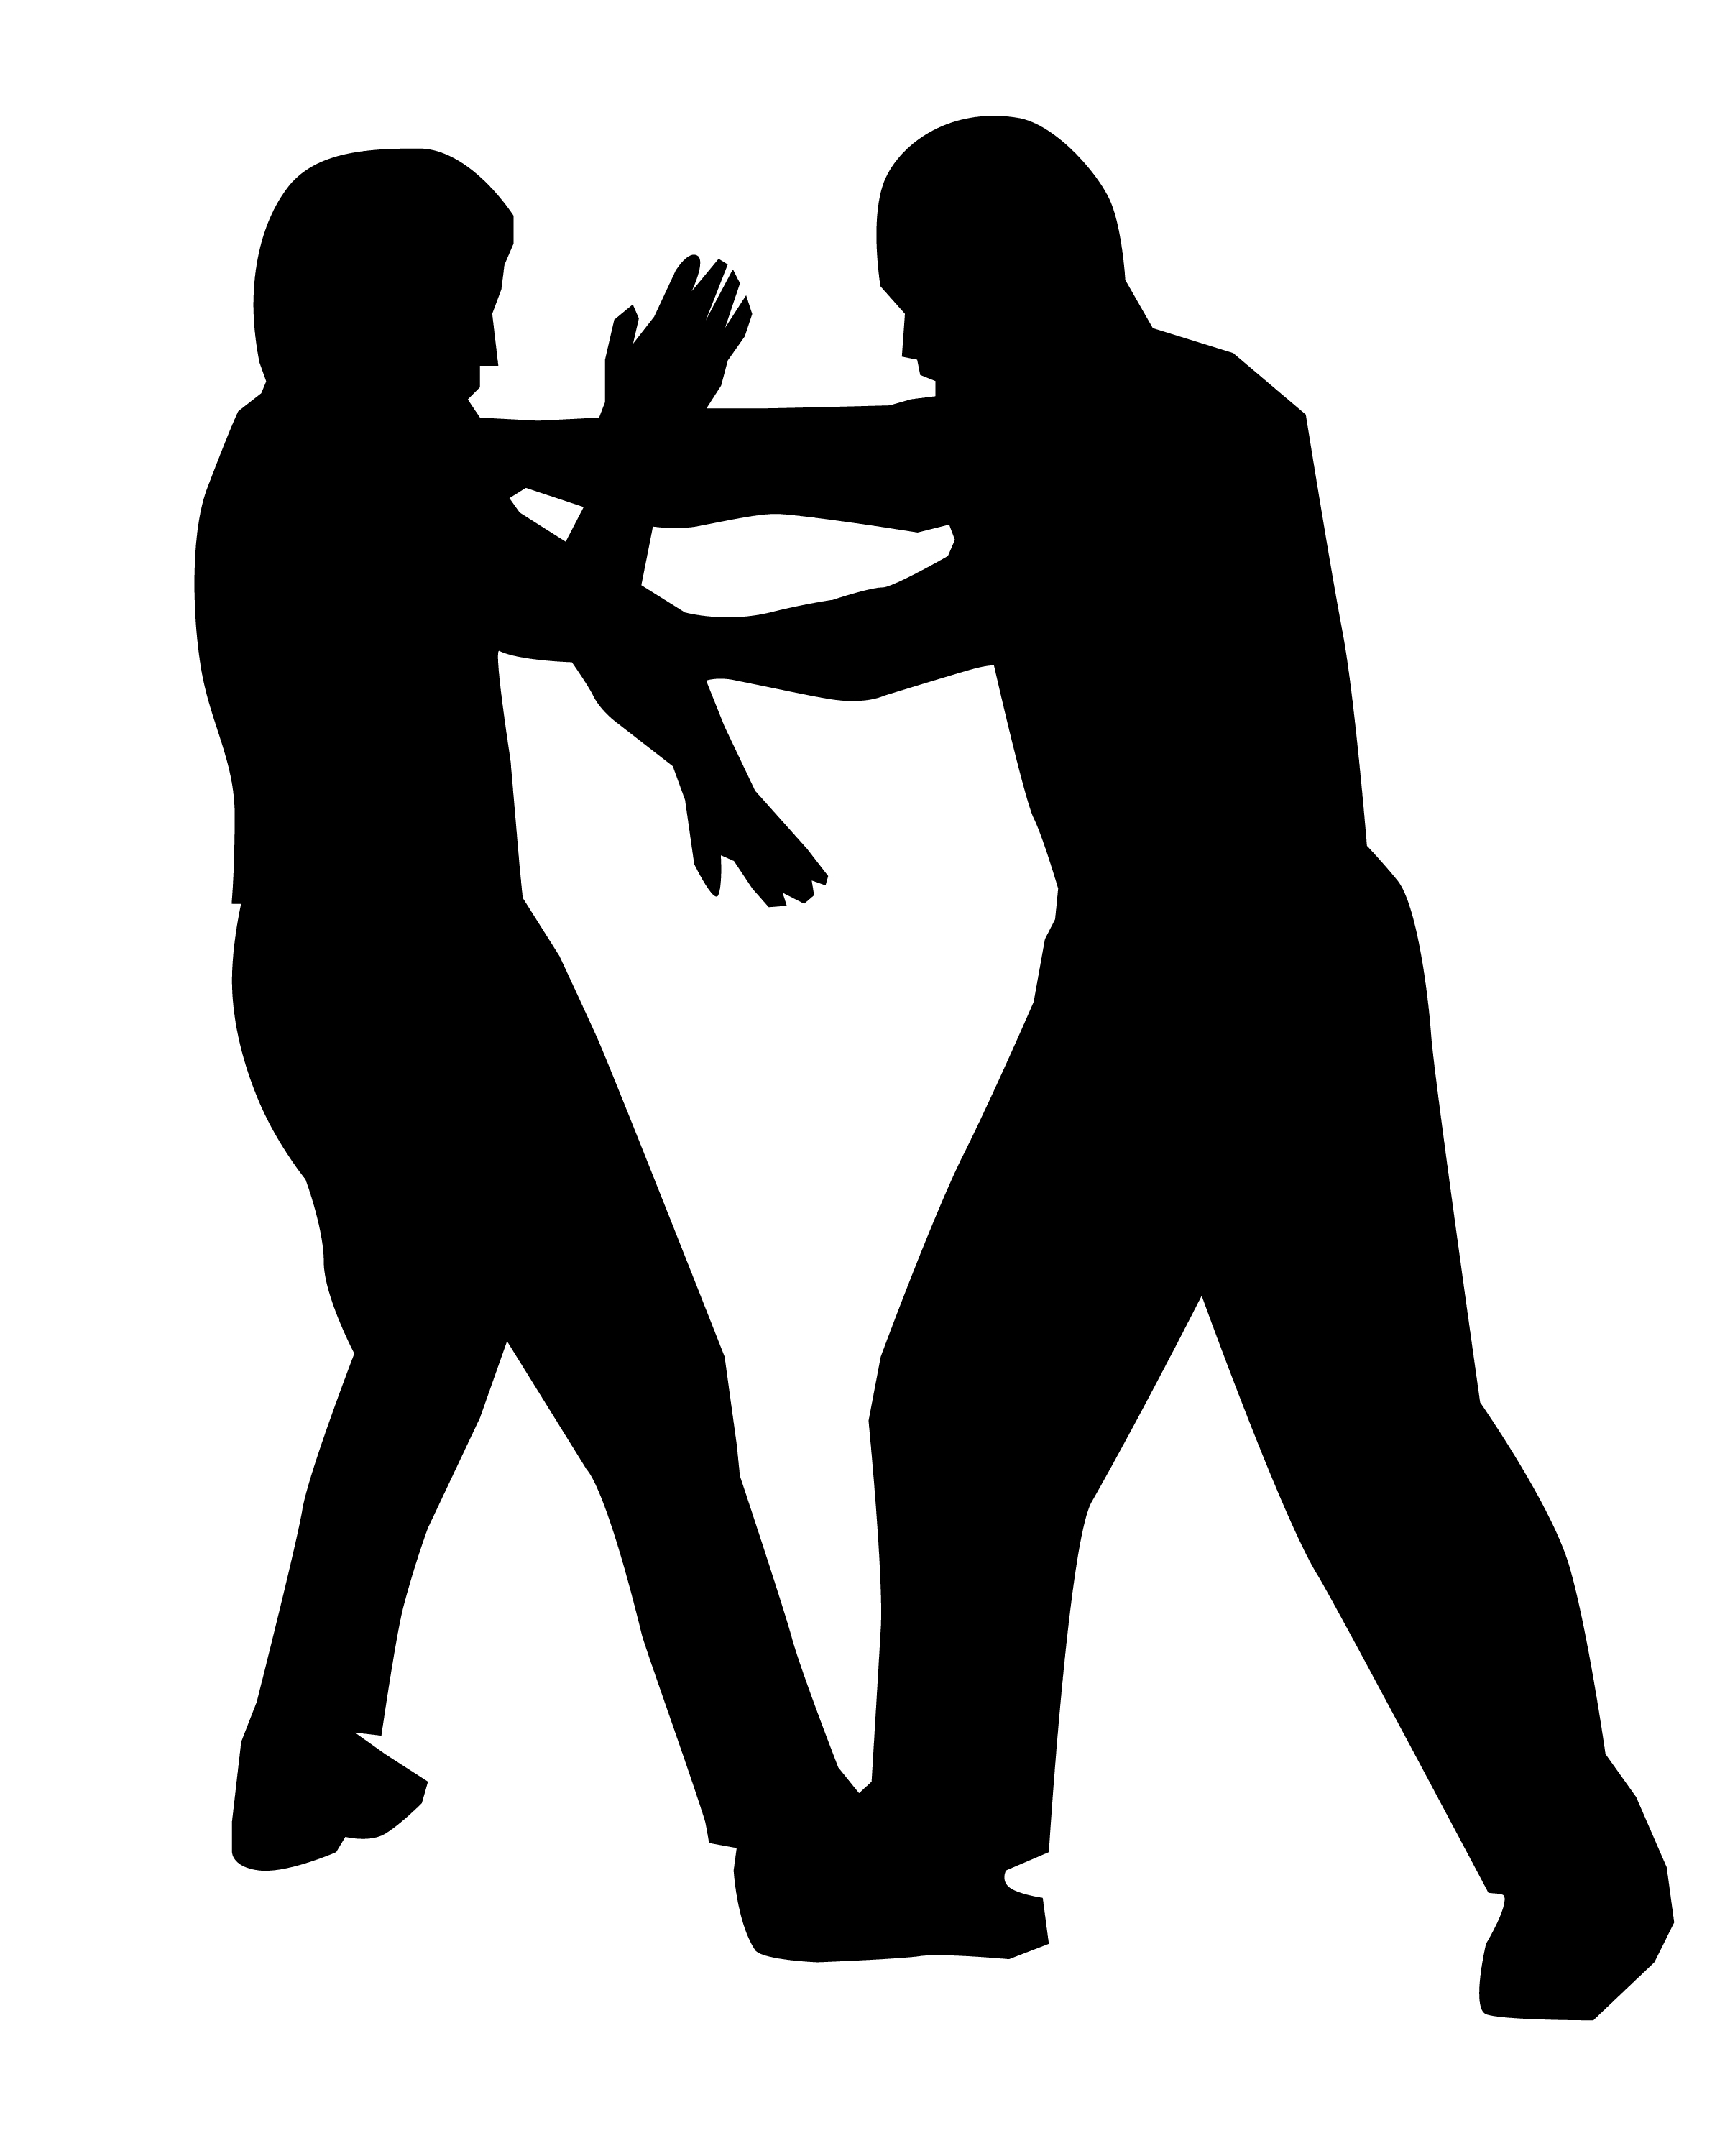 Krav Maga Street Fight — Self Defense - Fighting - Fitness - Page 3 sur 3 -  Krav Maga - préparation physique - technique de combat